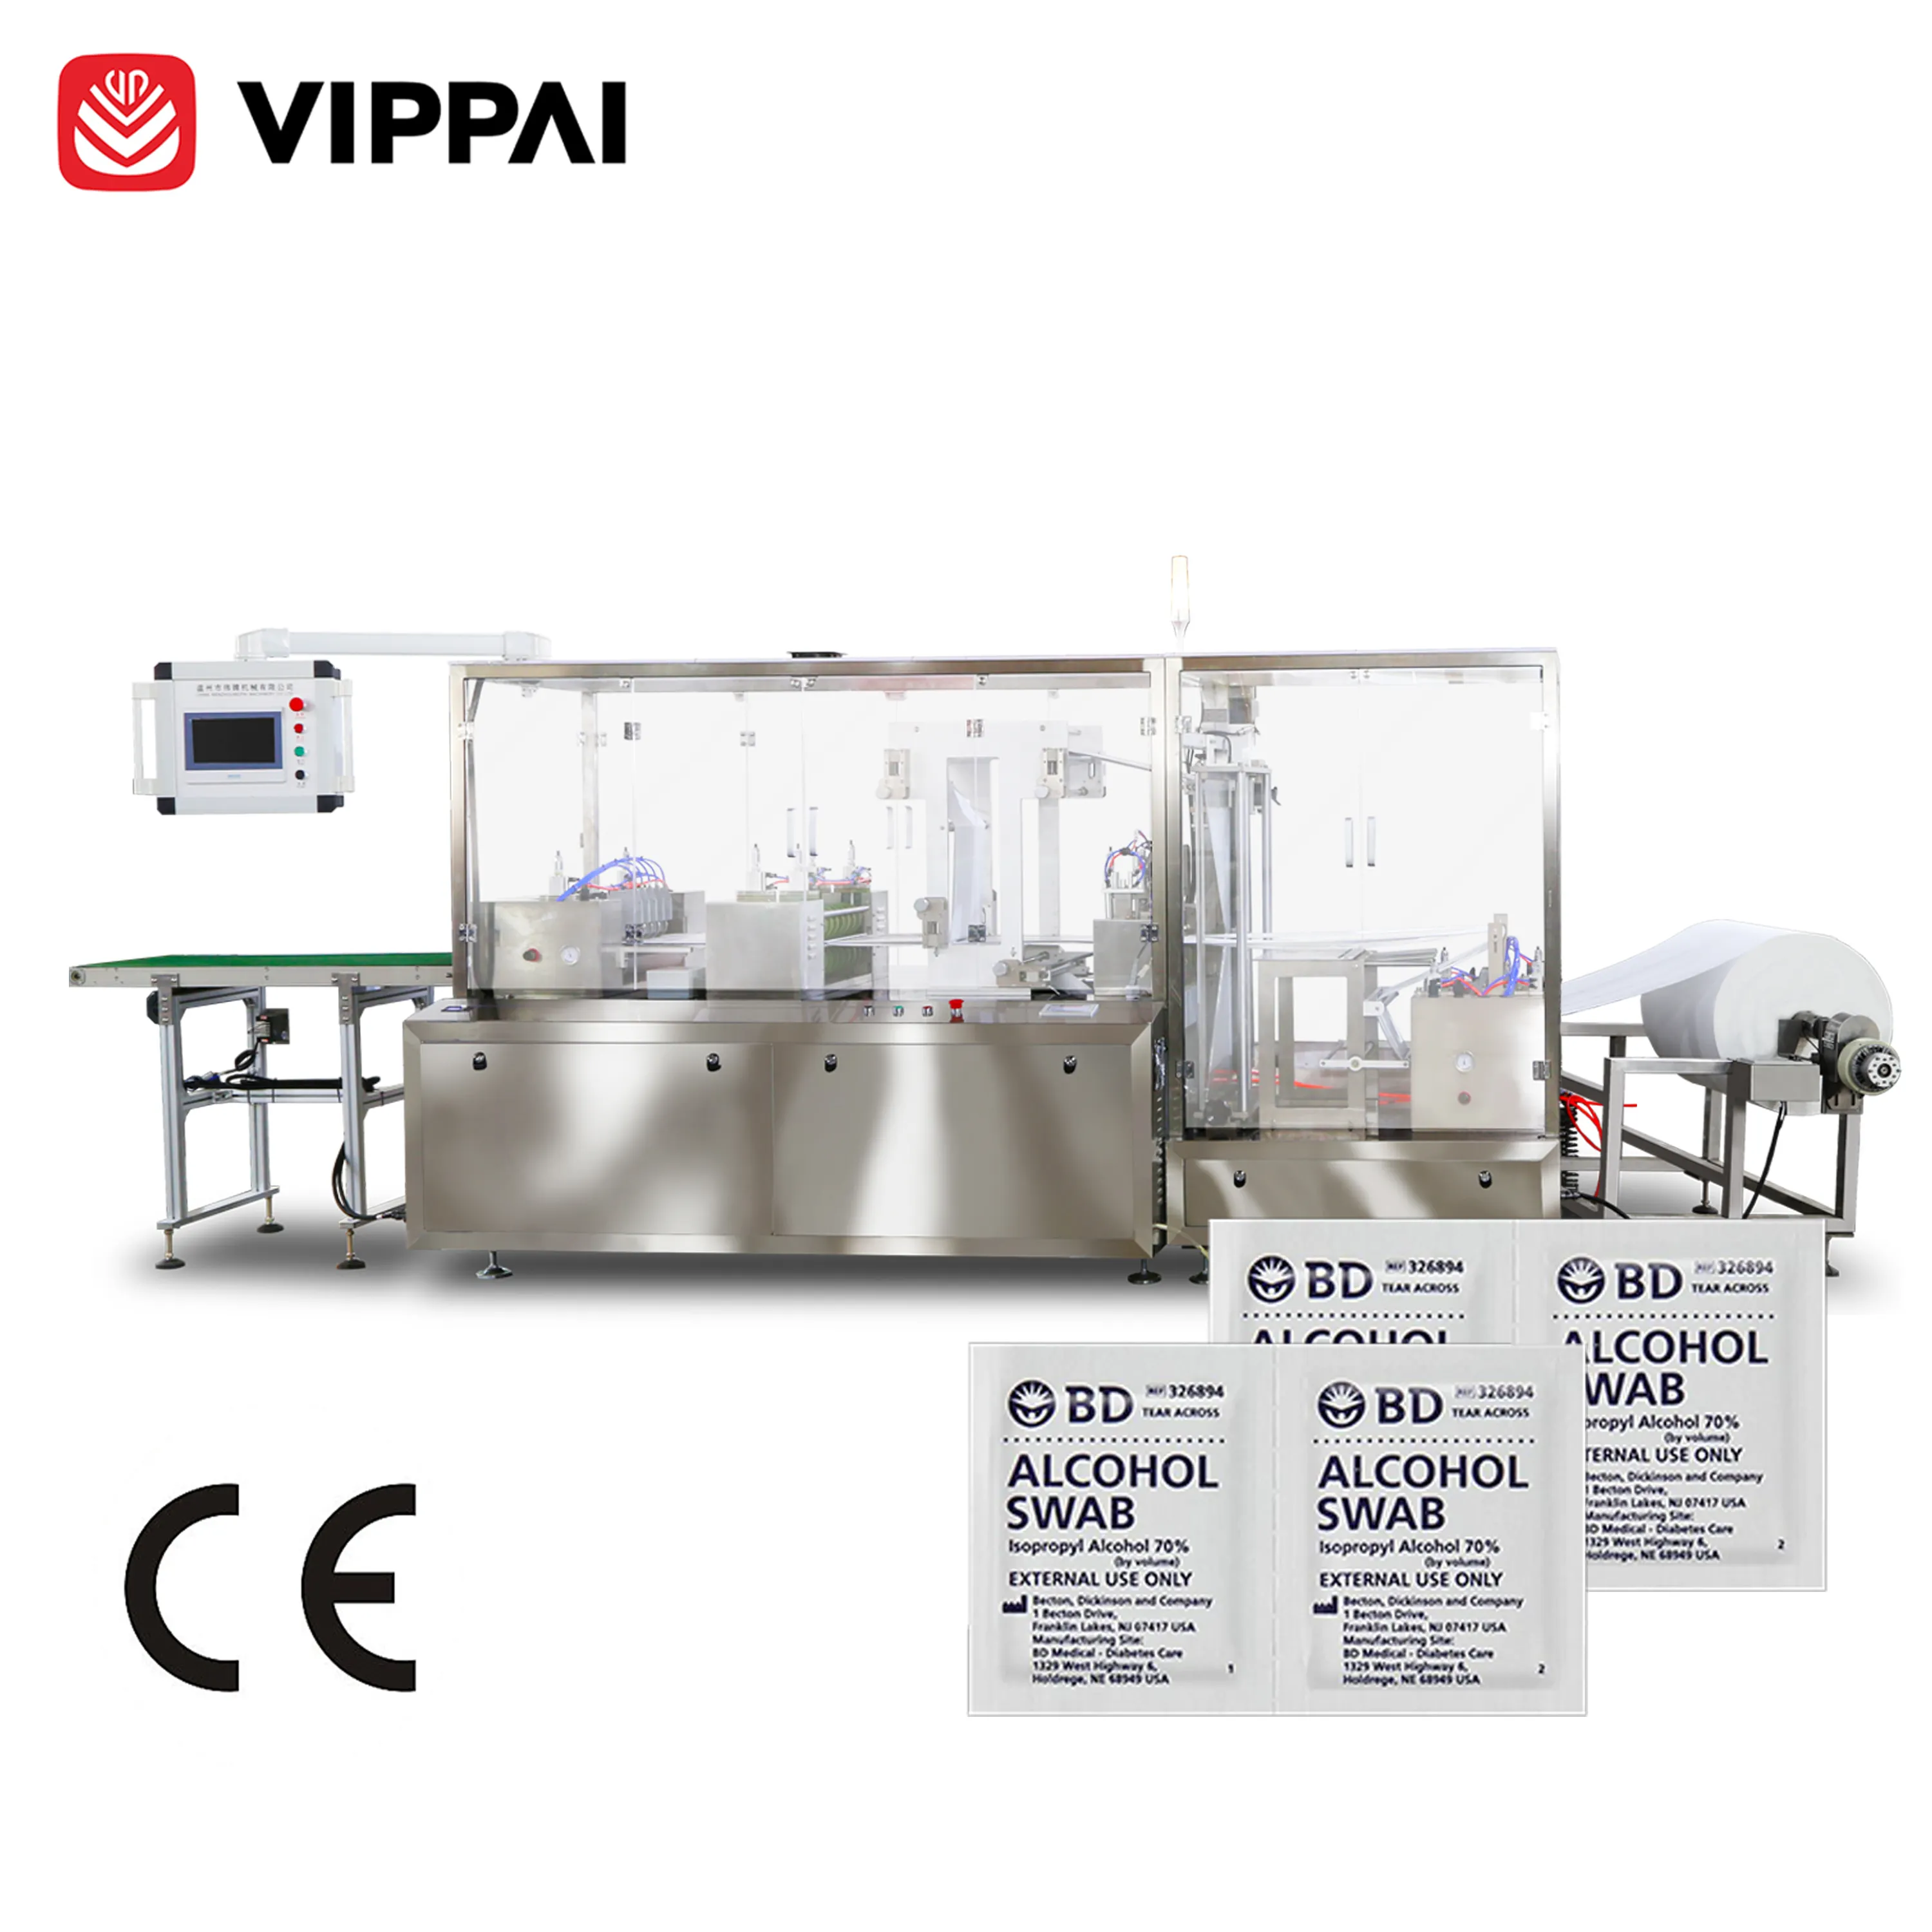 VIPPAI(weipai) 促進された4面密閉アルコールシングルサシェプレップパッド綿棒ウェットワイプパッキング製造機